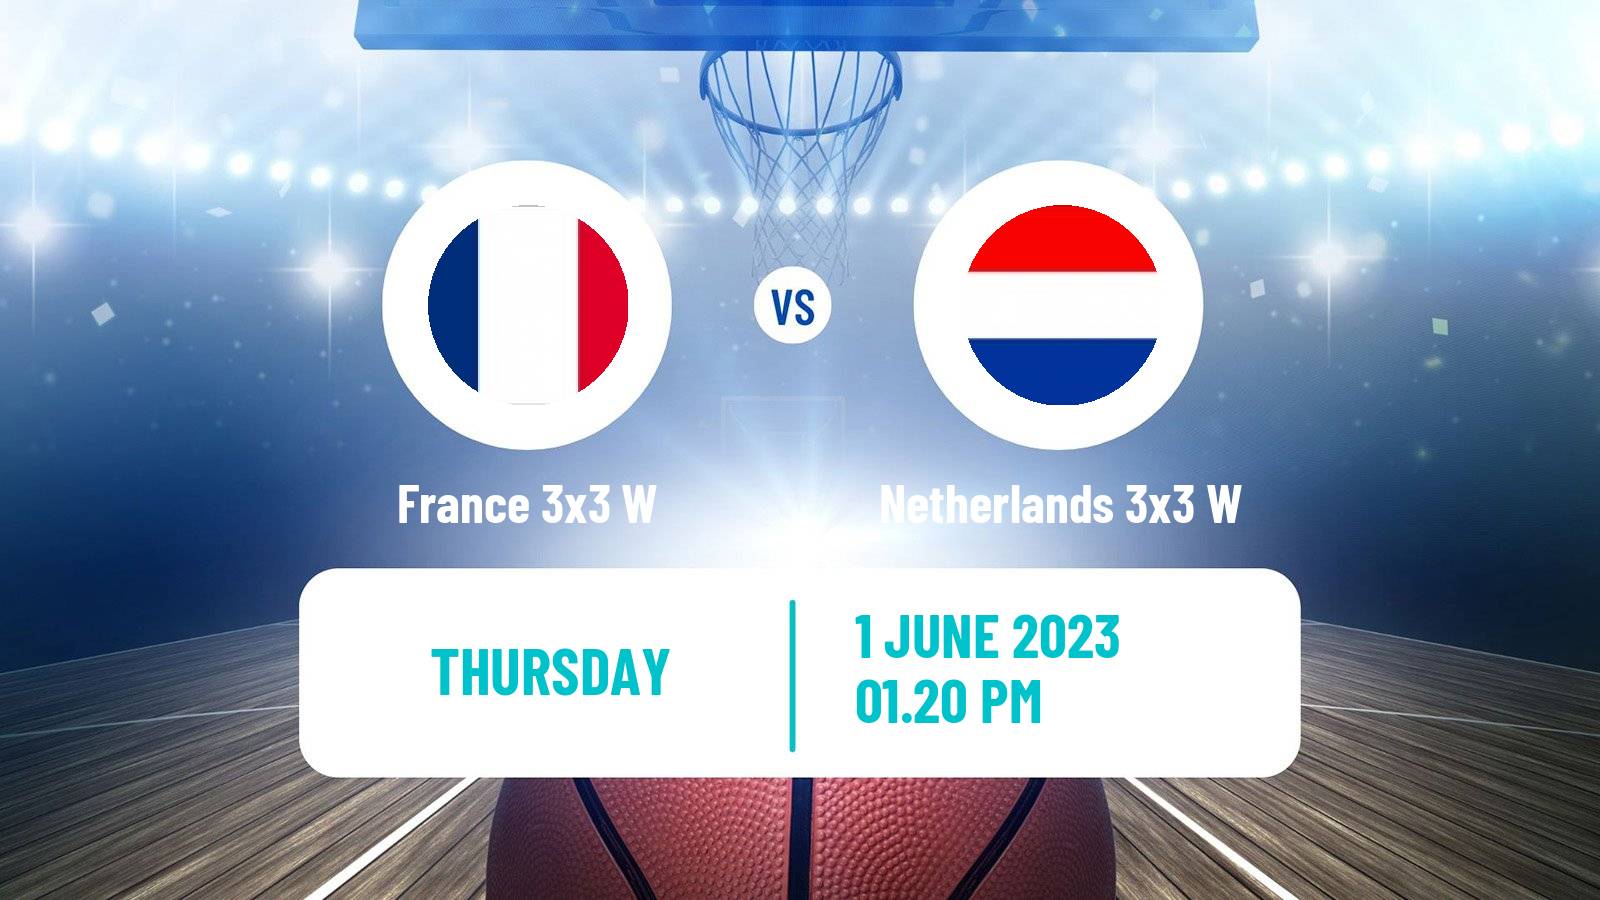 Basketball World Cup Basketball 3x3 Women France 3x3 W - Netherlands 3x3 W